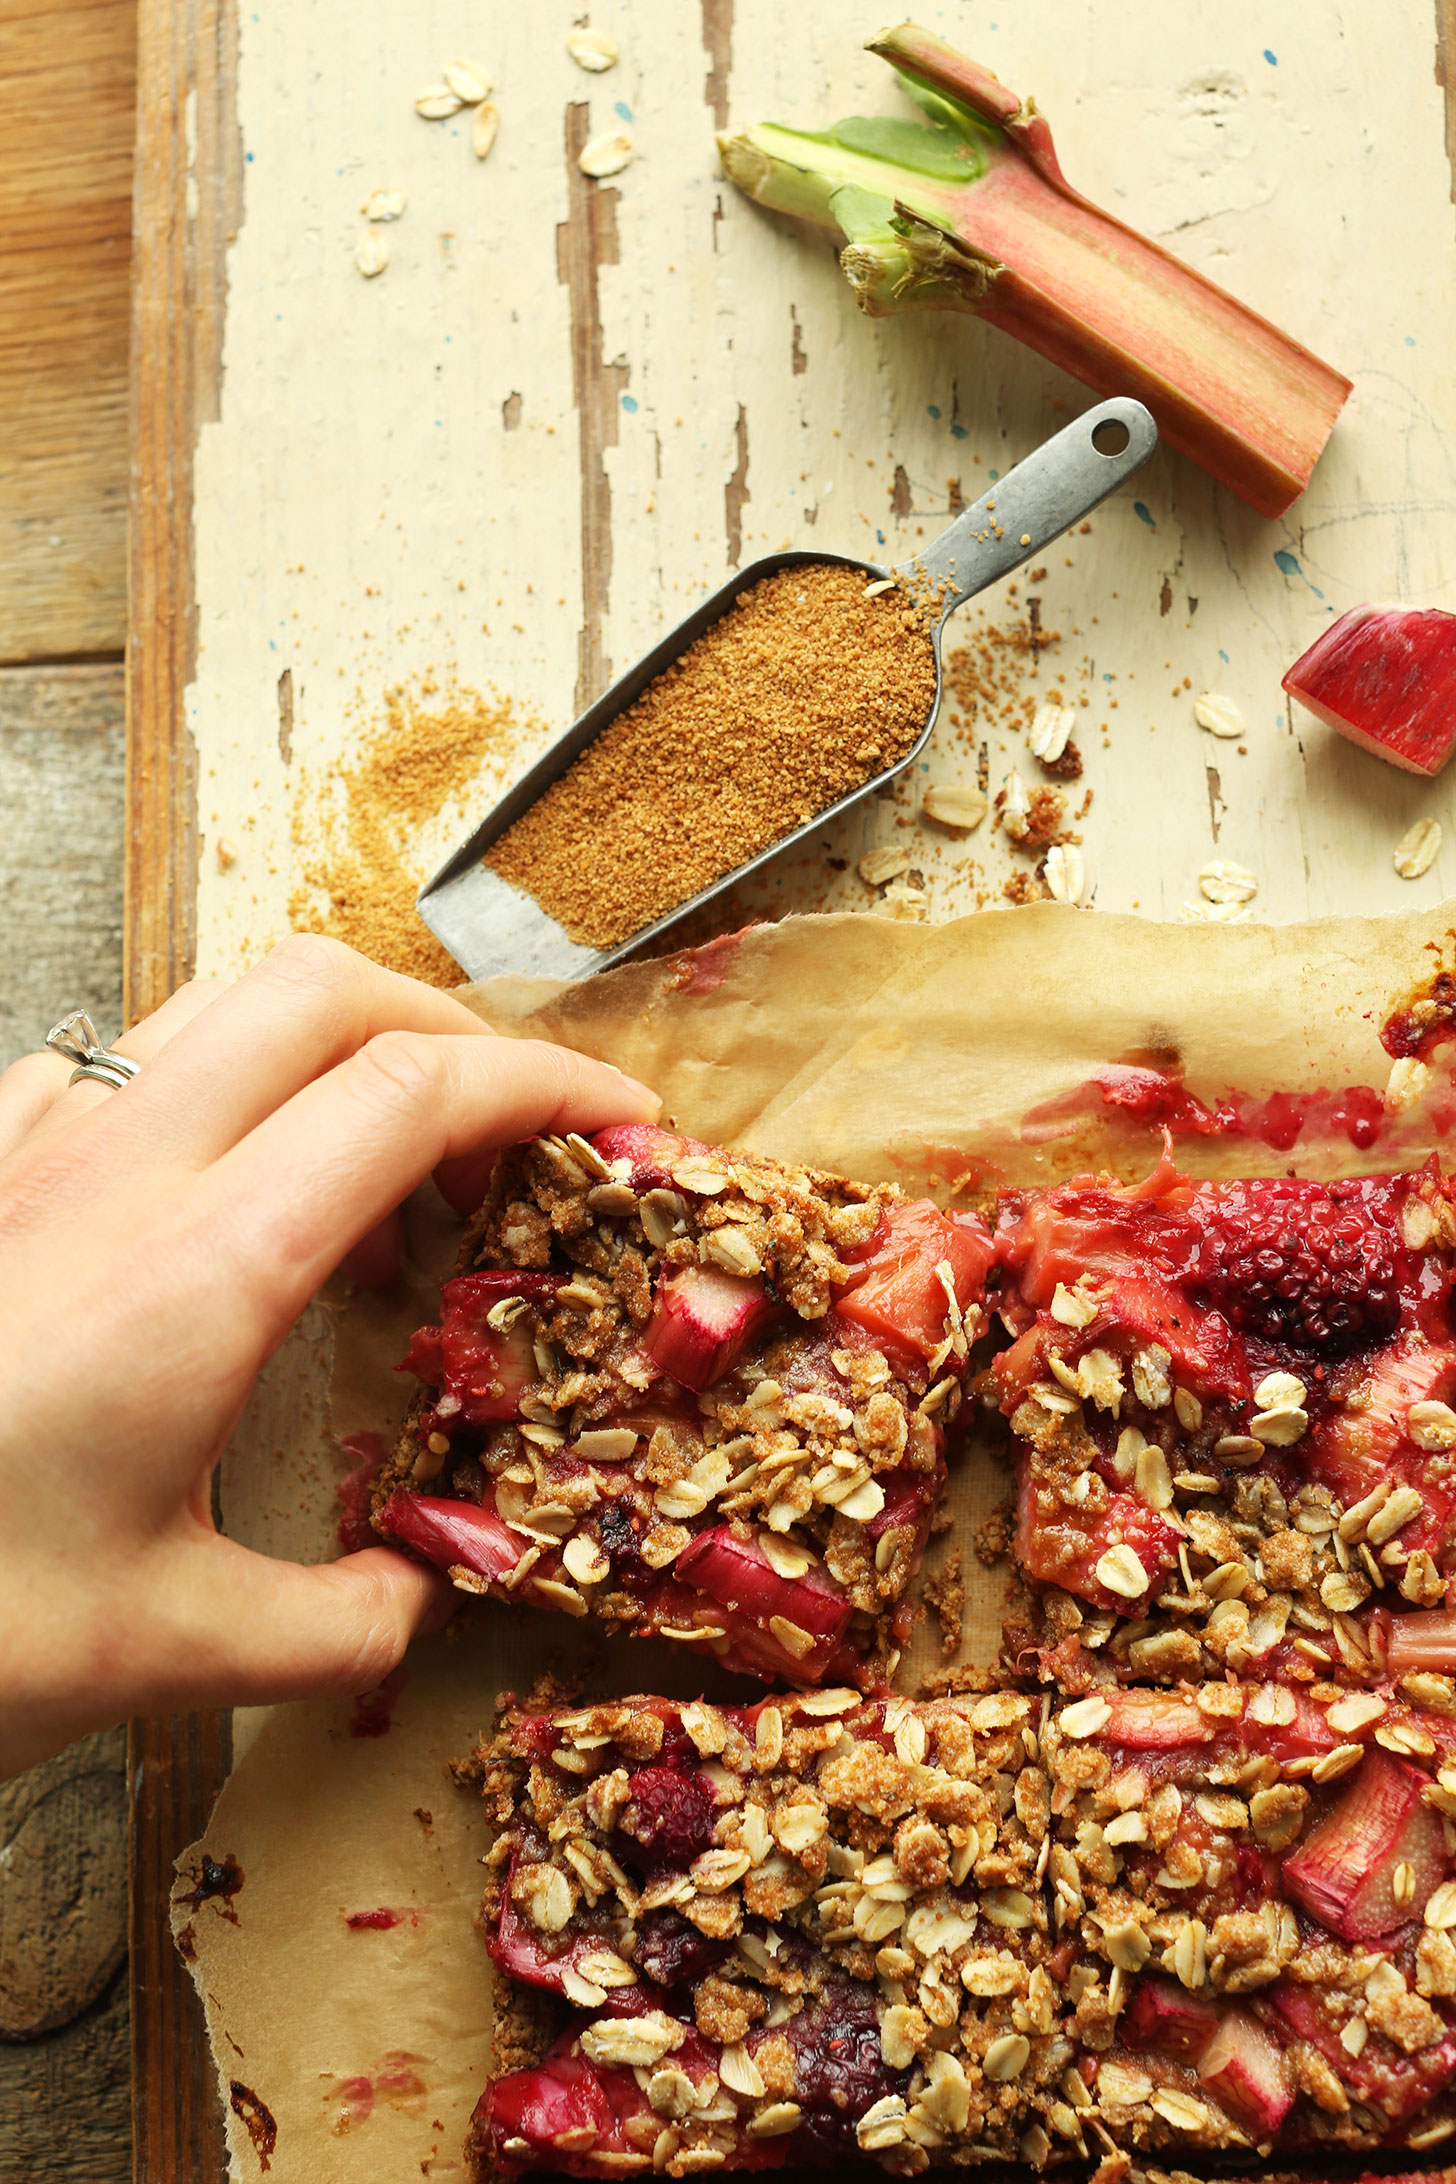 10-ingredient-strawberry-rhubarb-crumble-bars-vegan-glutenfree-rhubarb-dessert-recipe-healthy